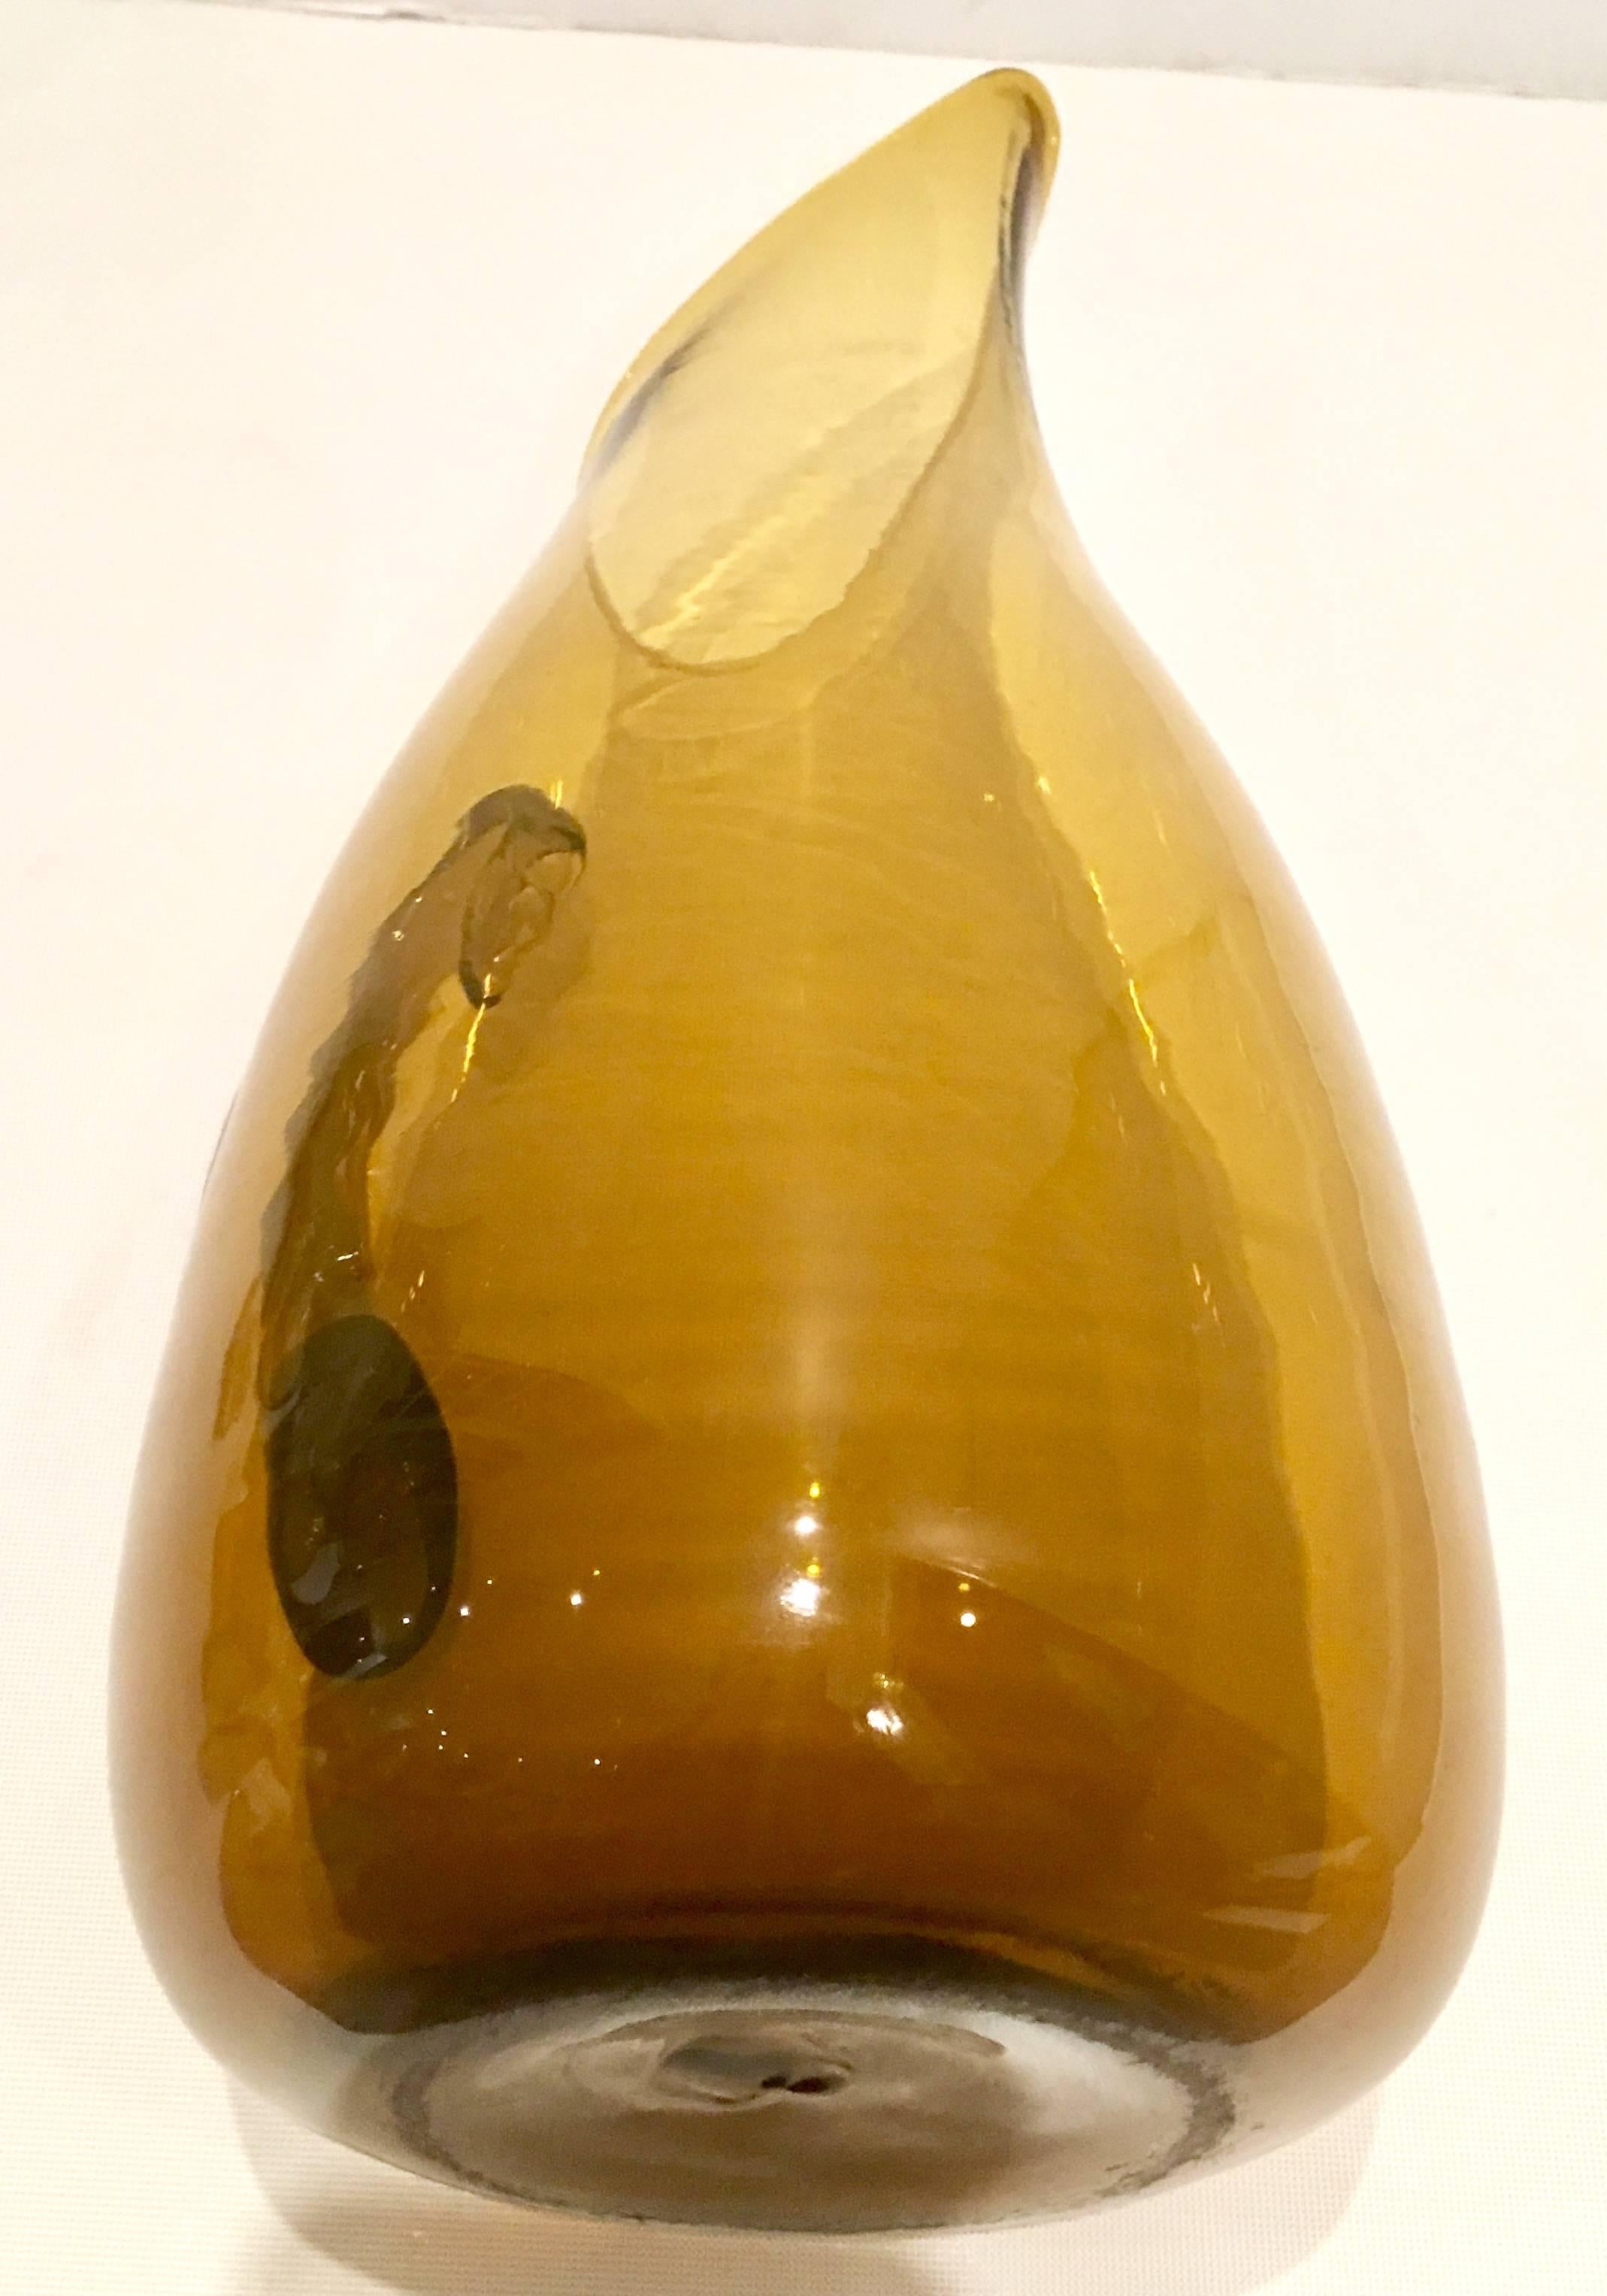 blenko pitcher with handle